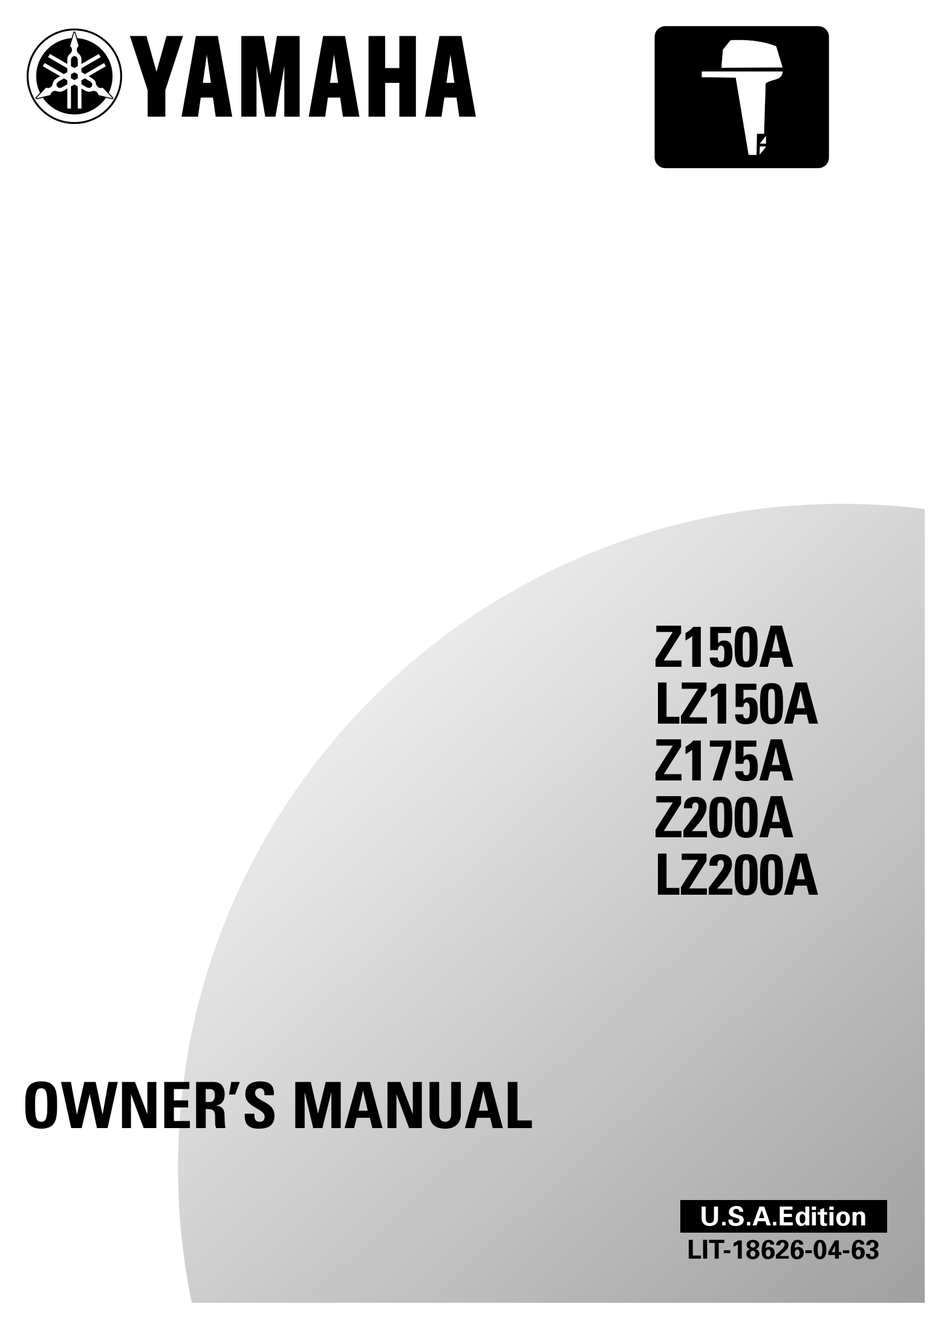 YAMAHA Z150A OWNER'S MANUAL Pdf Download | ManualsLib